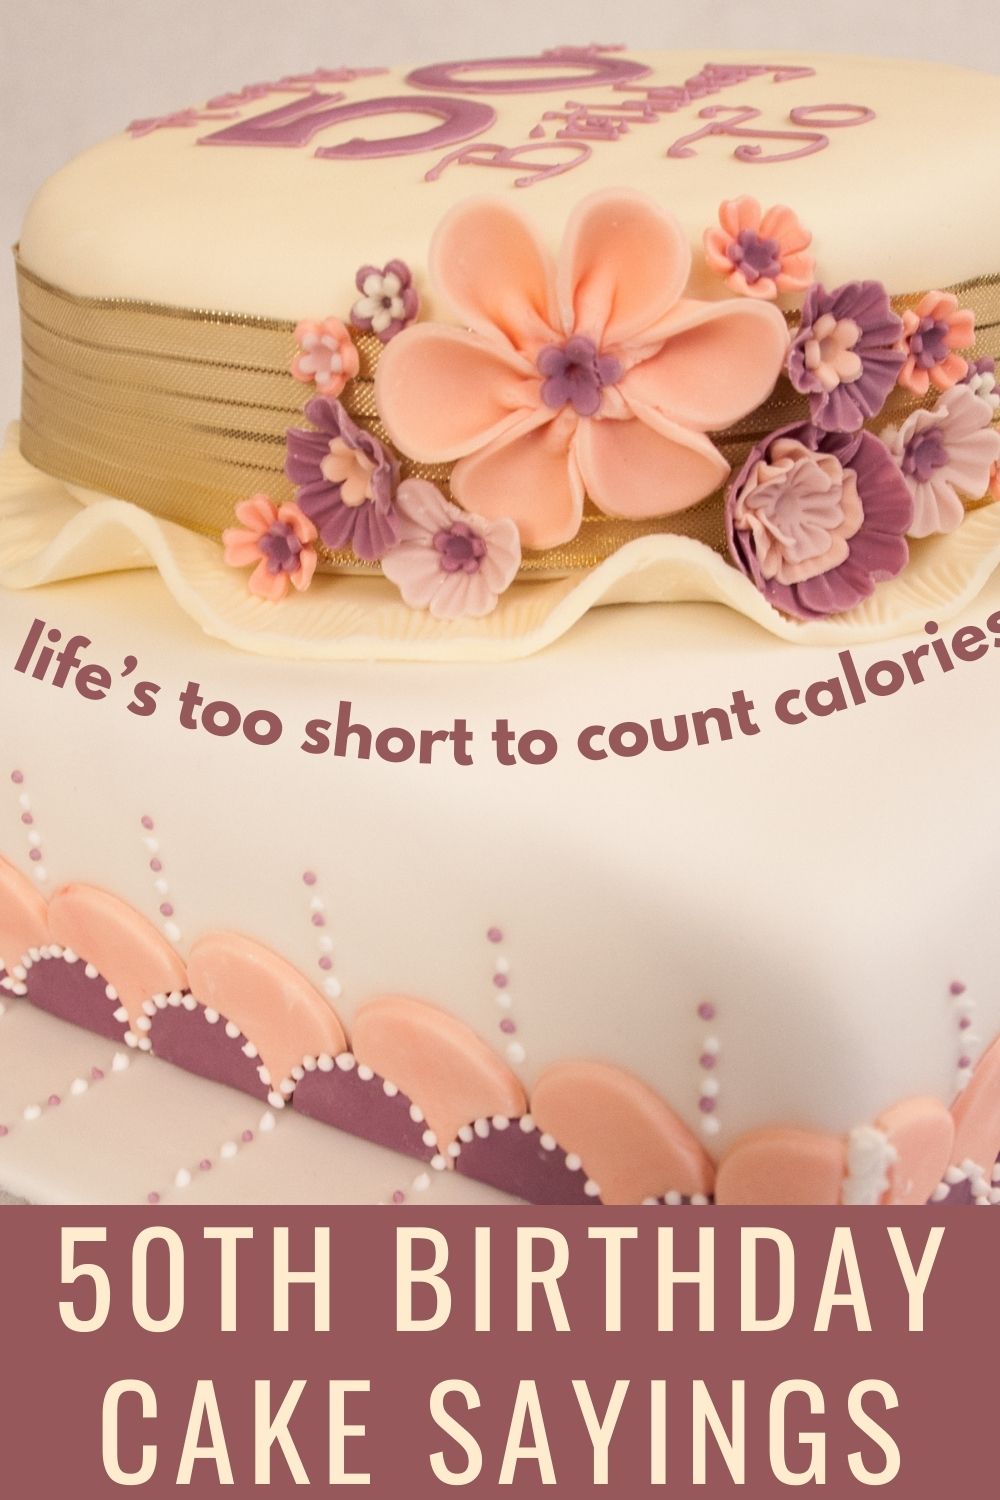 50th birthday cake sayings